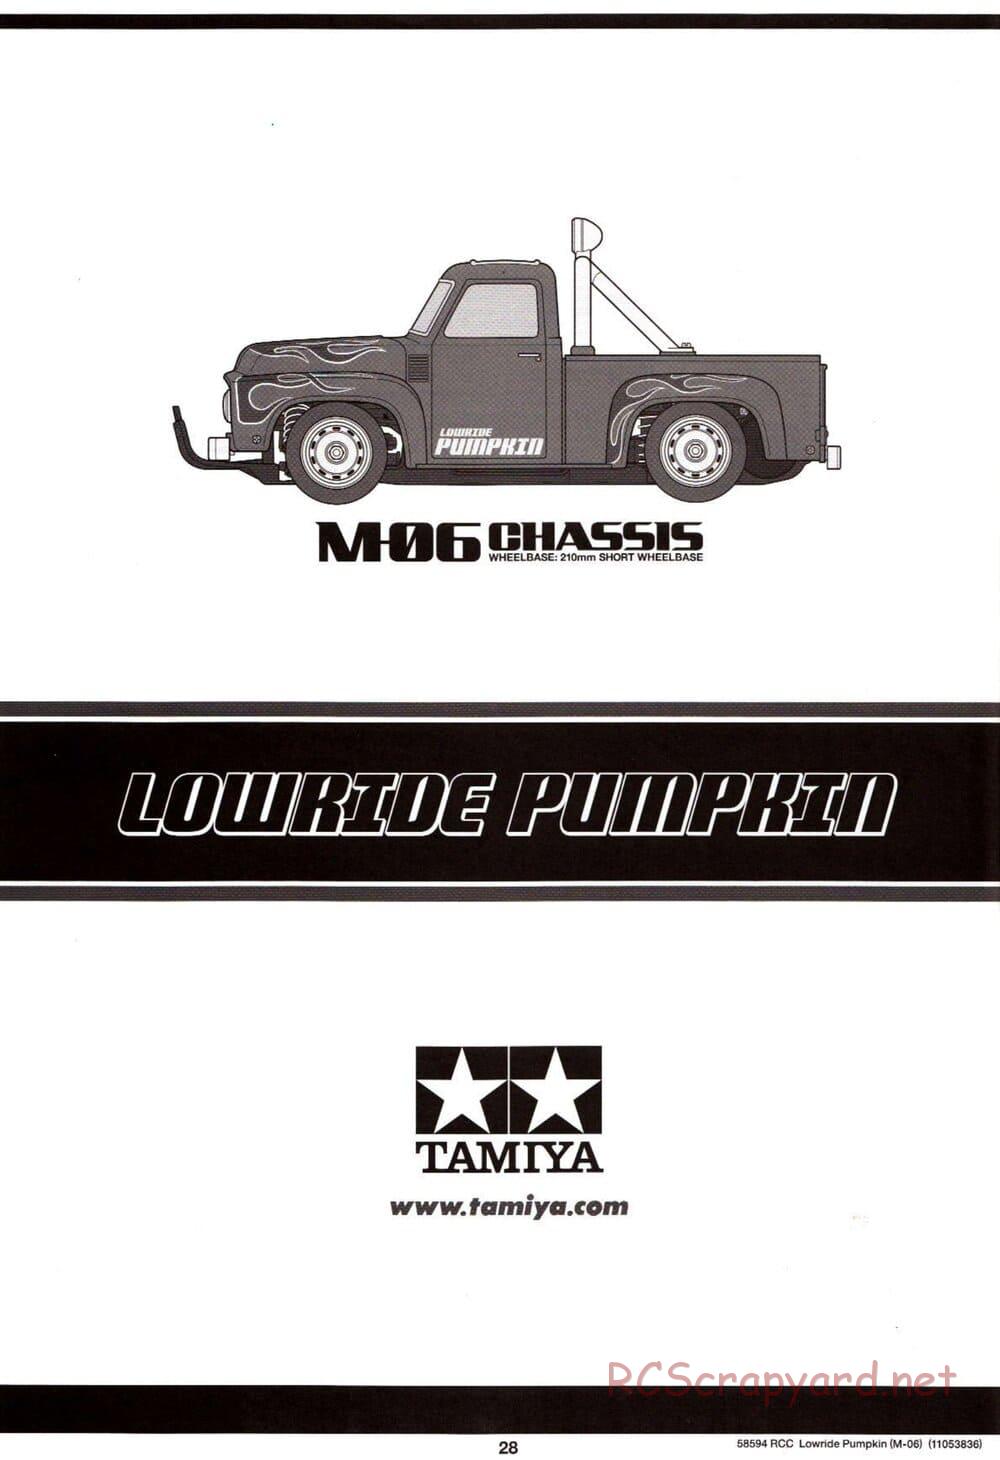 Tamiya - Lowride Pumpkin - M-06 Chassis - Manual - Page 28